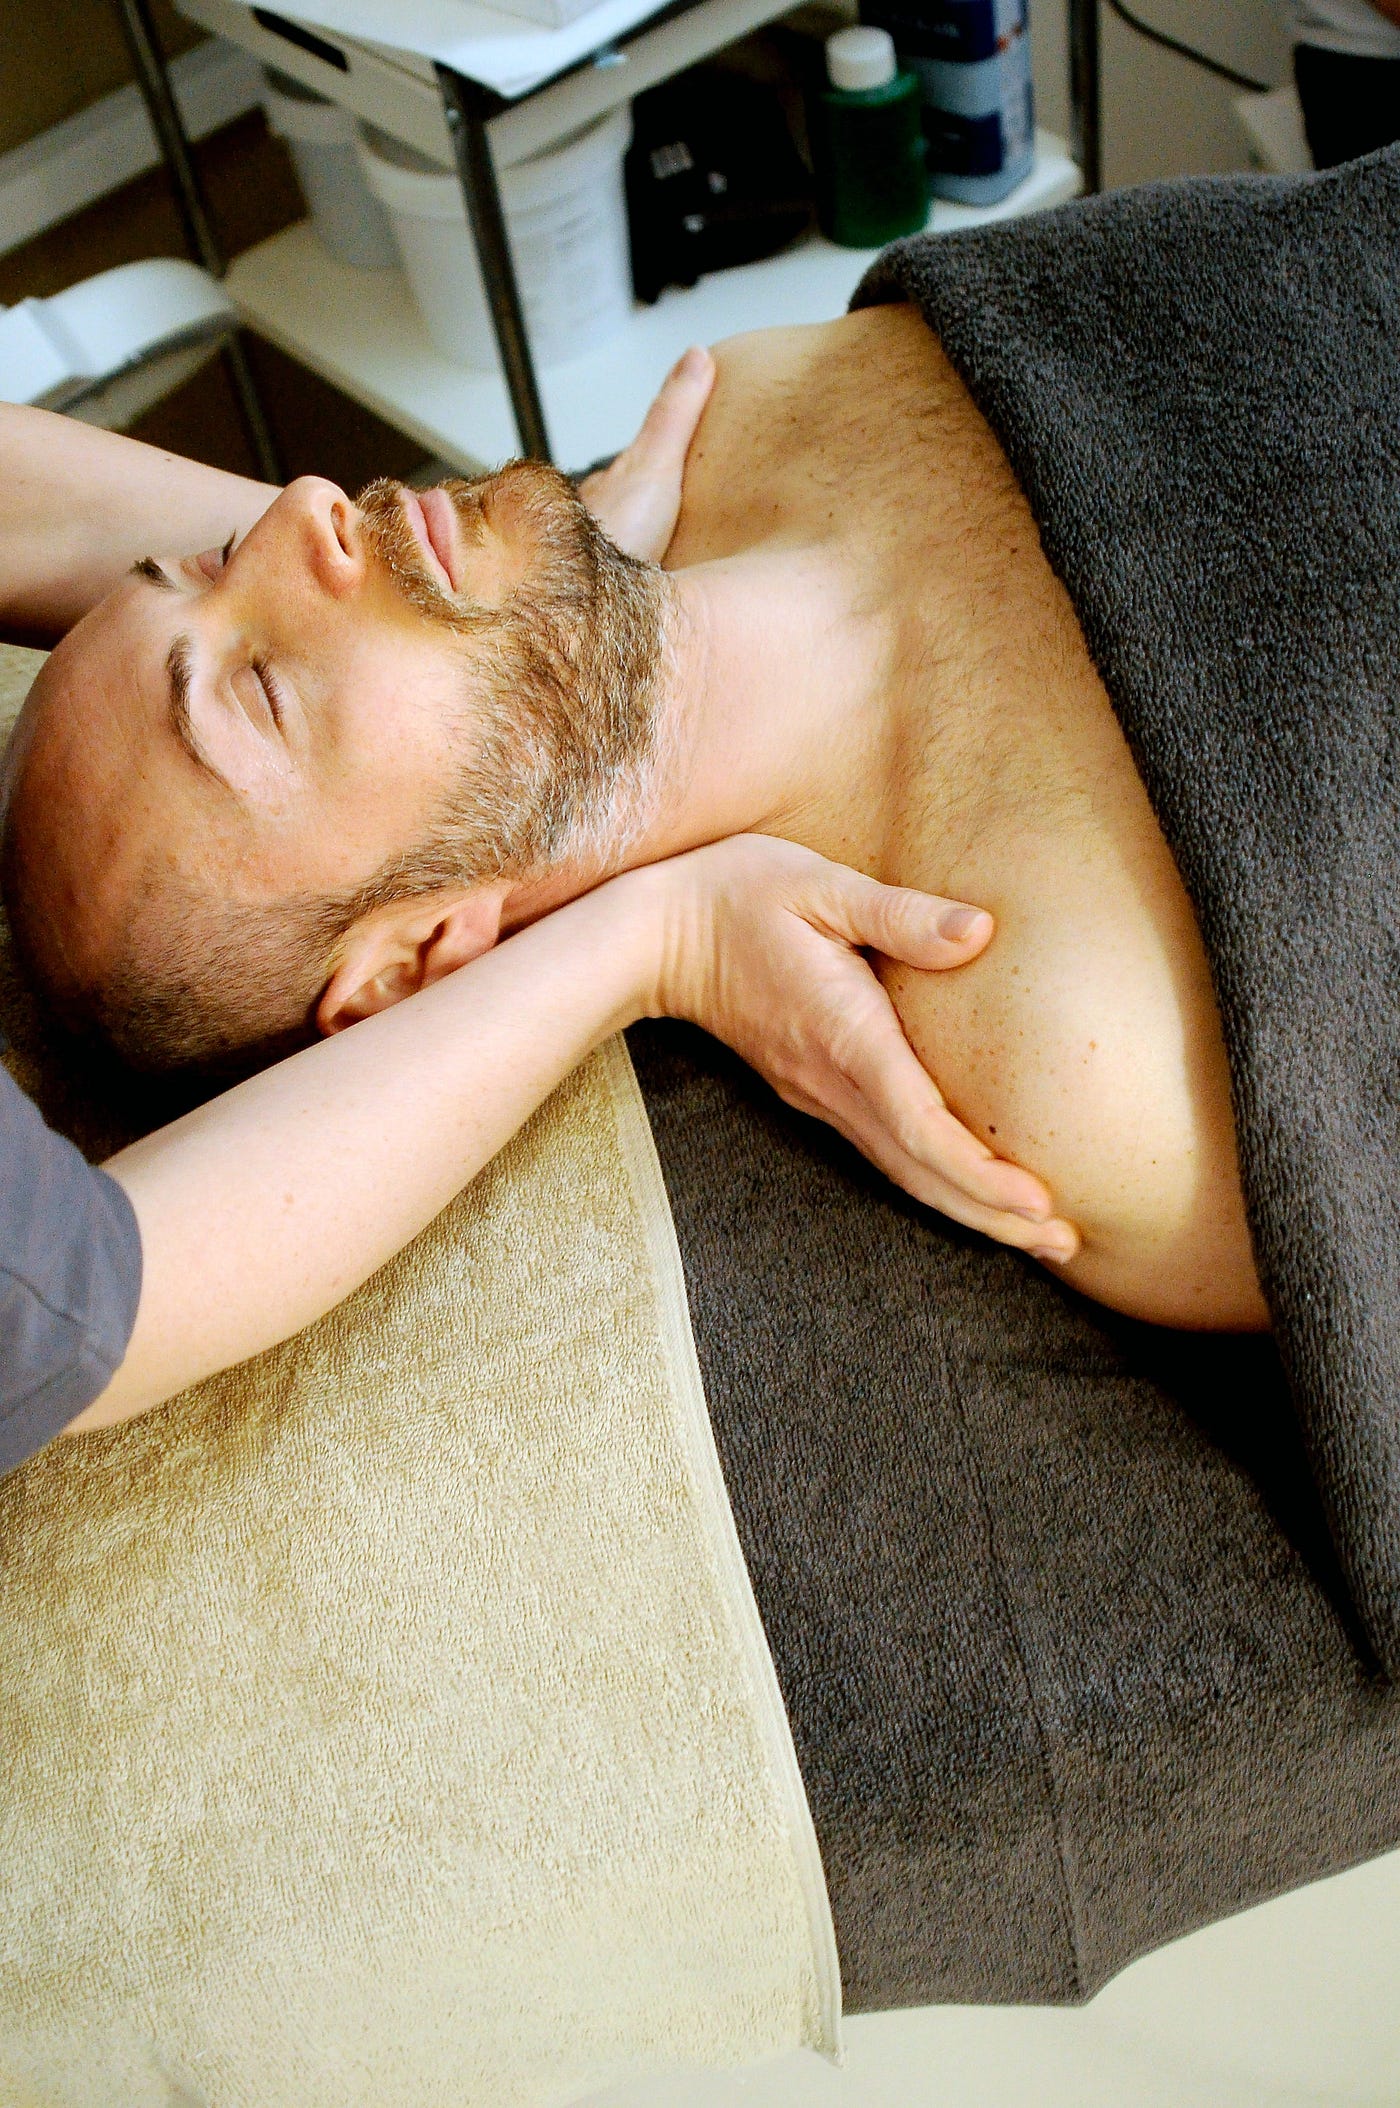 My Embarrassing Massage. Not all endings are happy | by Bernard | Medium